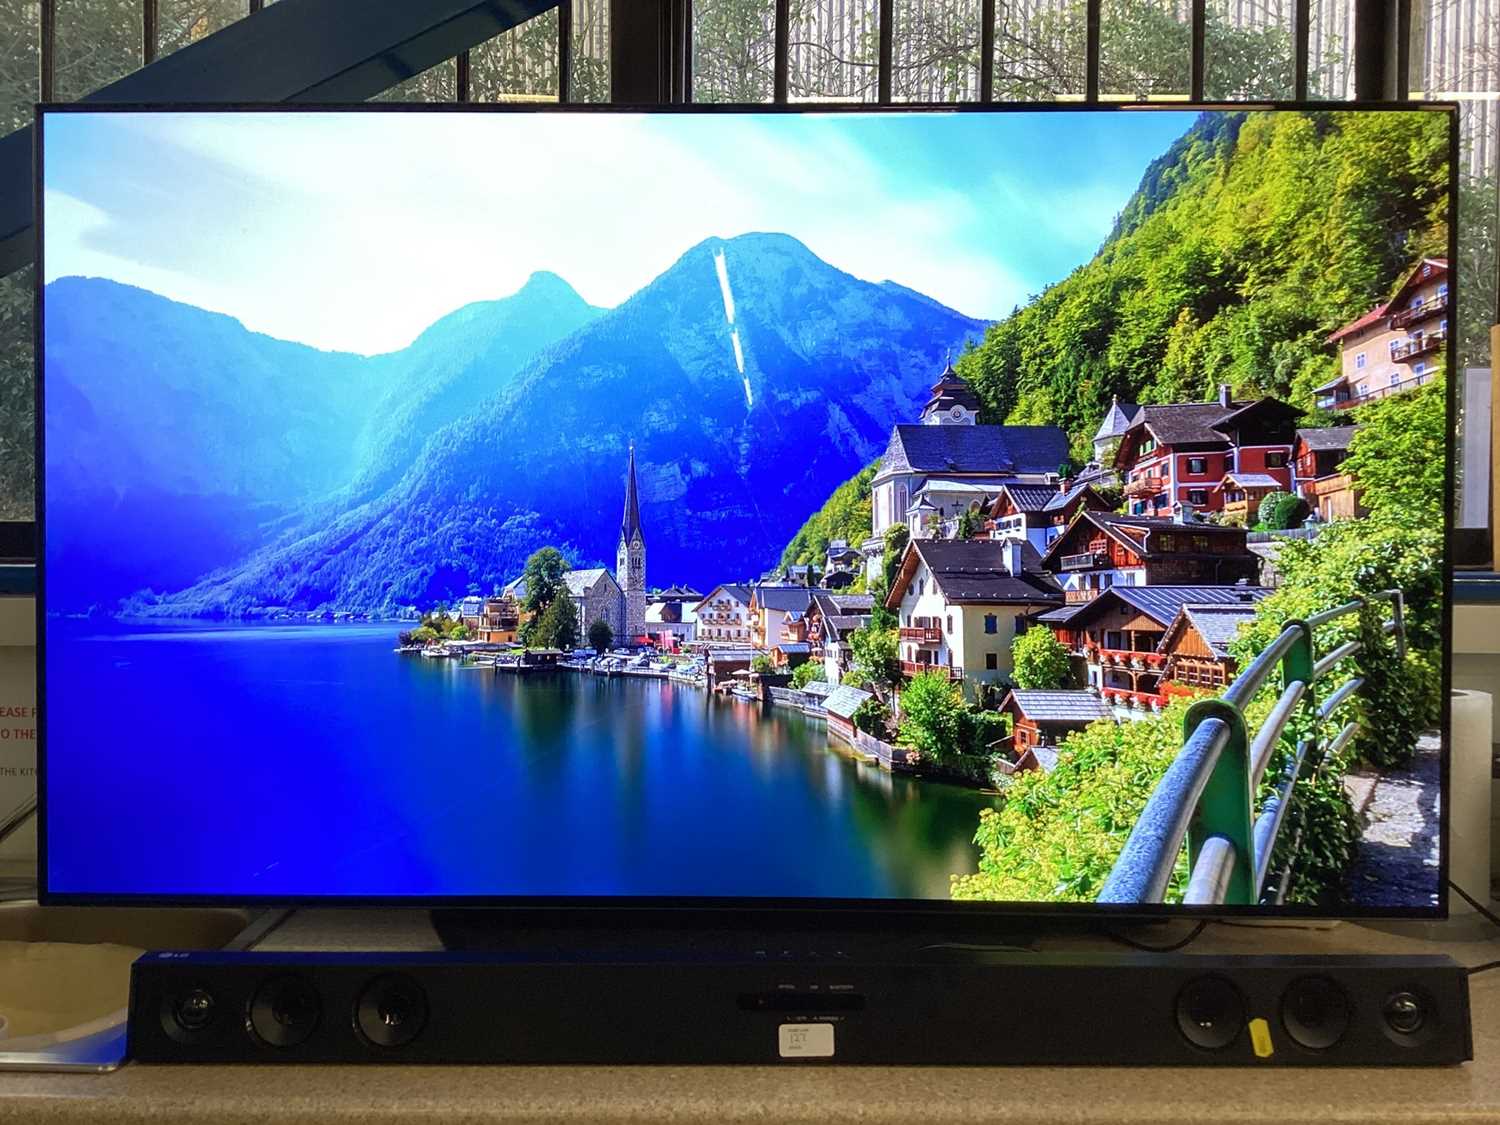 Lot 127 - LG OLED flatscreen smart television, model number OLED55B9PLA with remote control, together with an LG sound bar model number SK1D